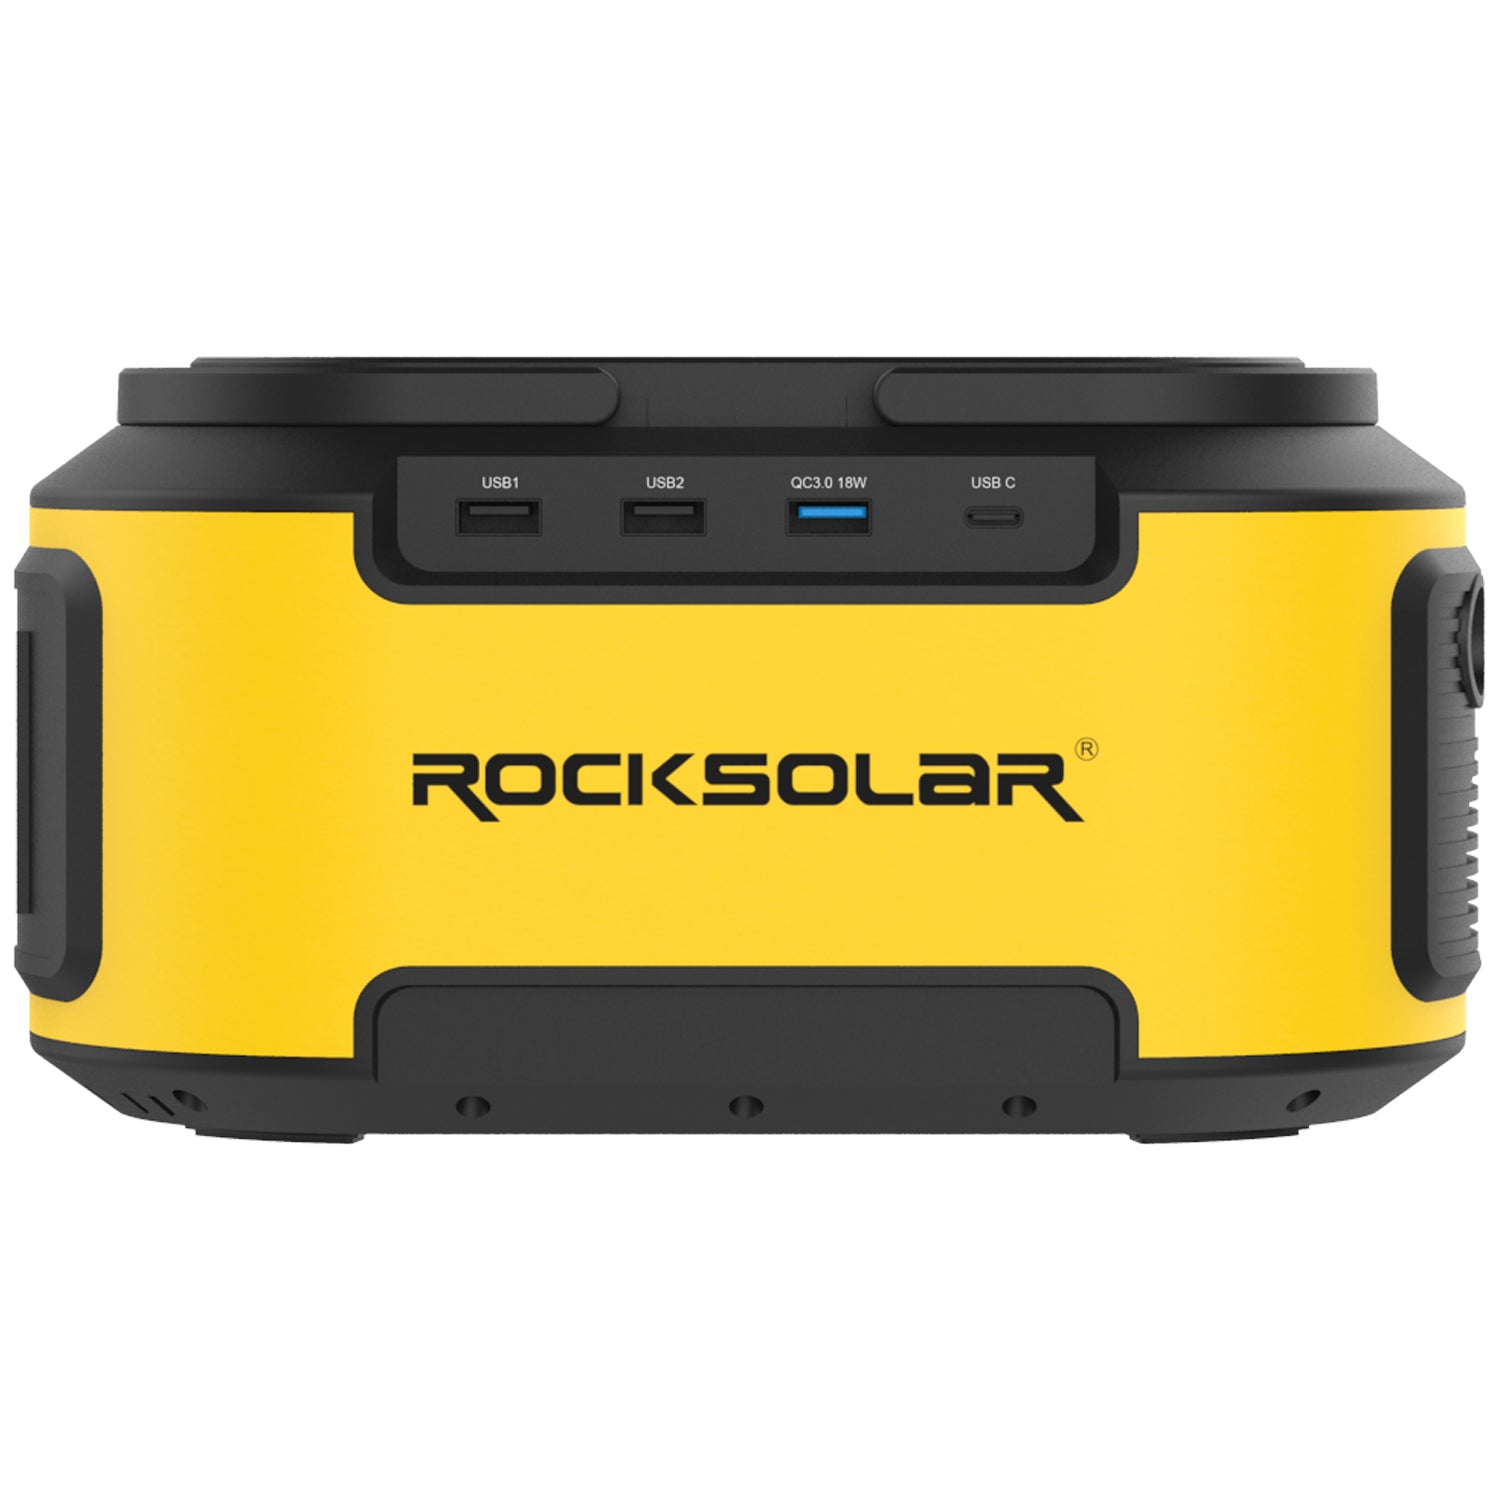 ROCKSOLAR Ready 200W Portable Power Station - Lithium Battery and Solar Generator